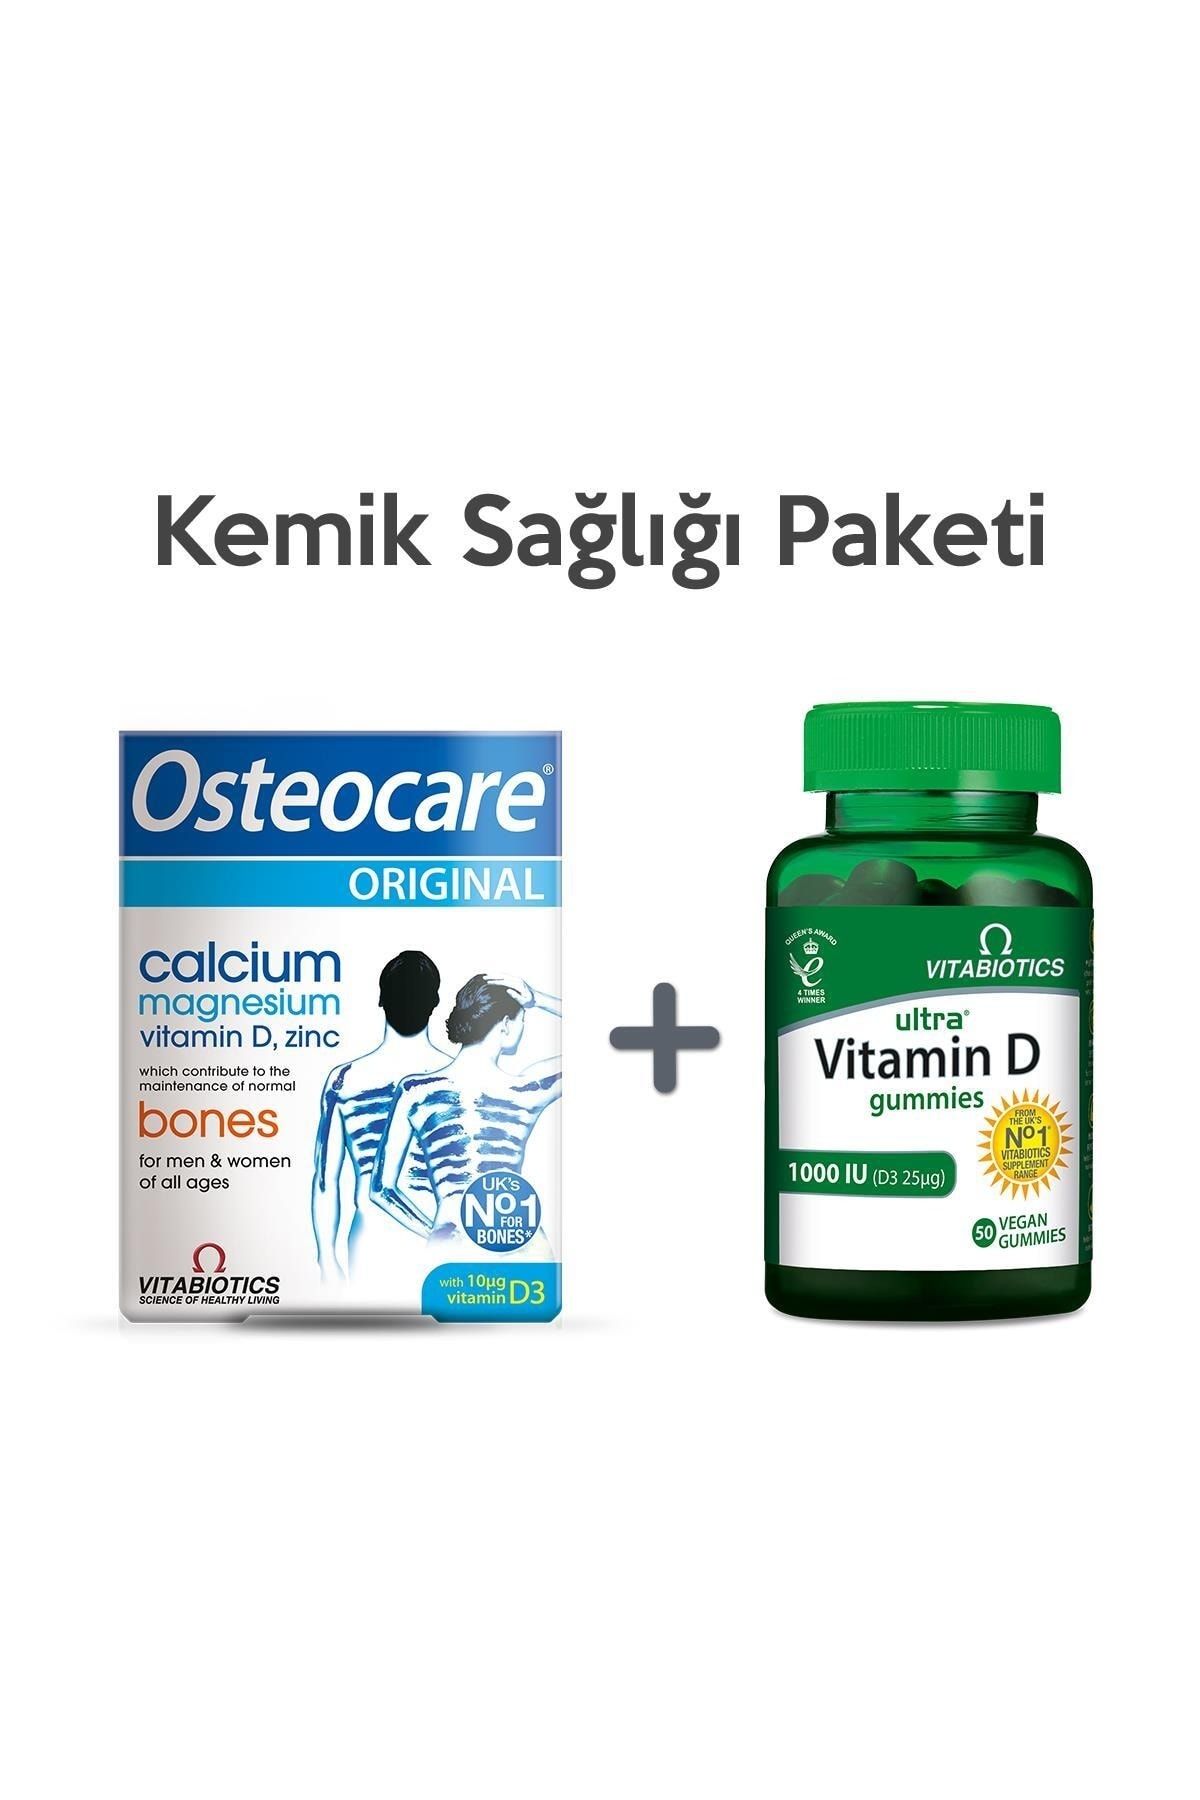 Osteocare 30 Tablet Ultra Vitamin D Gummies - Kemik Sağlığı Paketi